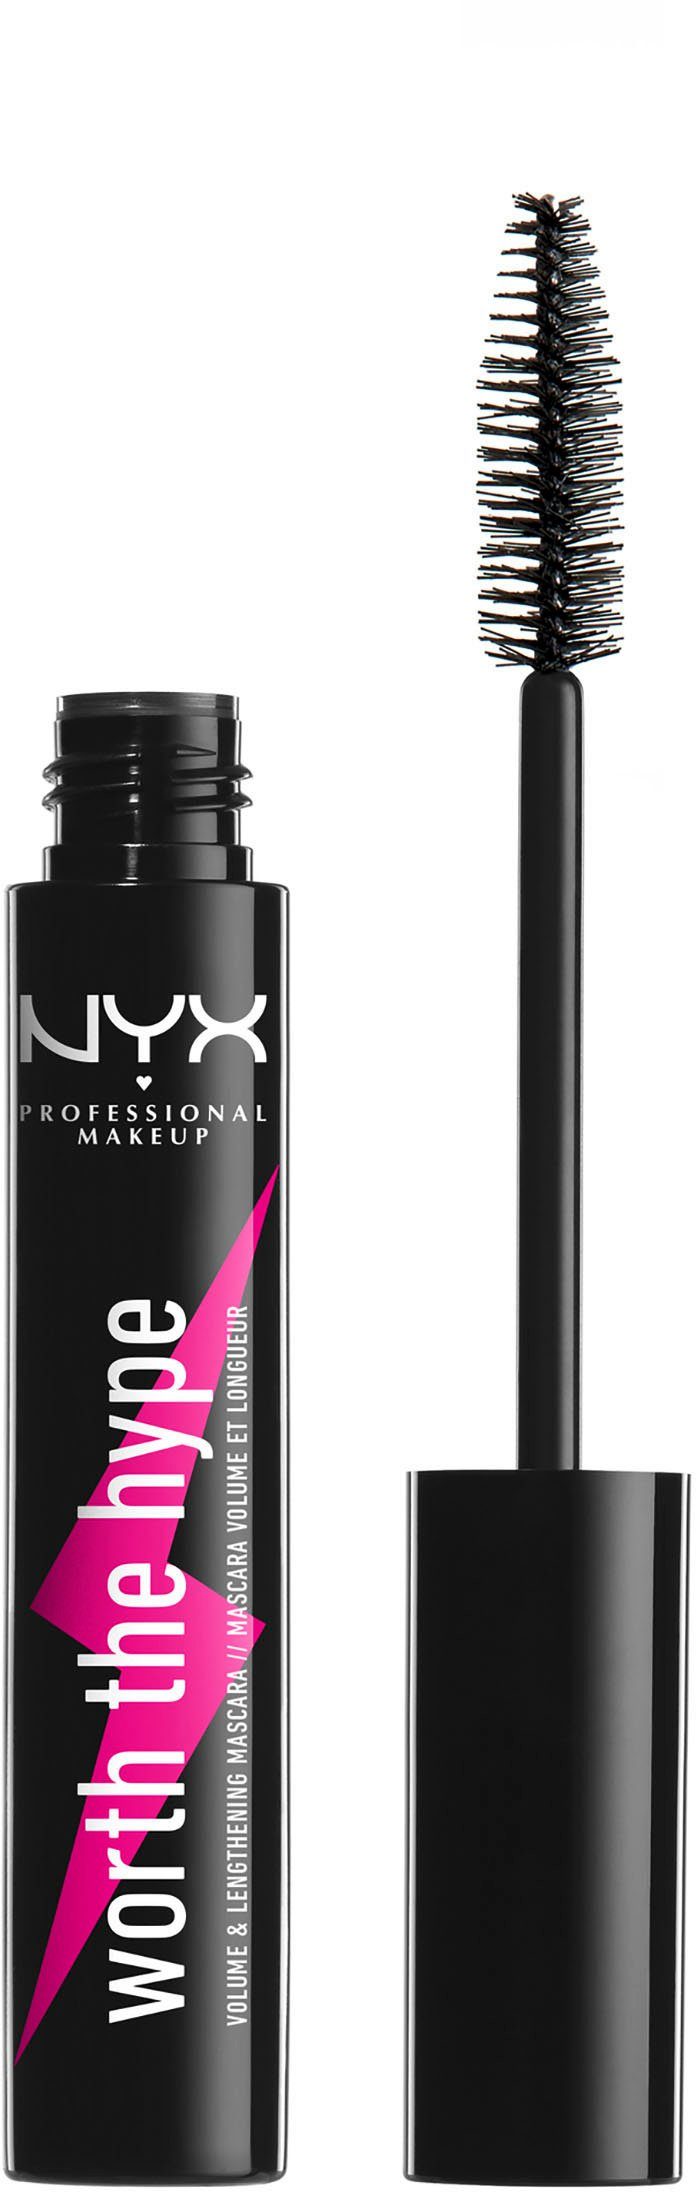 NYX Mascara Professional Makeup Hype Worth Mascara The